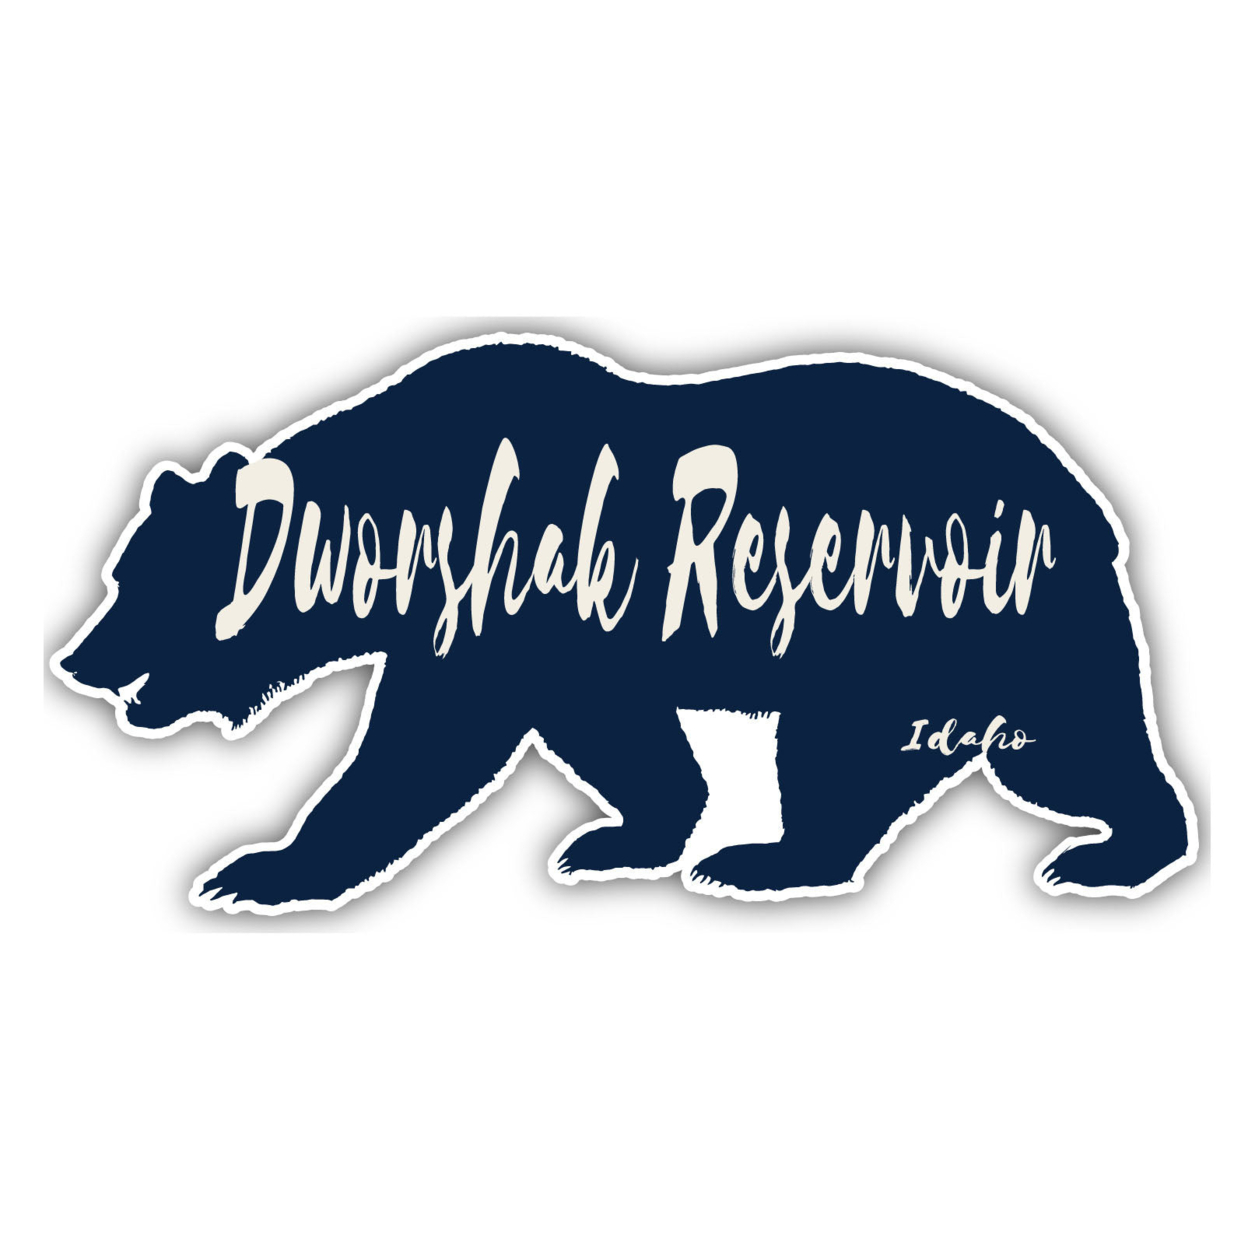 Dworshak Reservoir Idaho Souvenir Decorative Stickers (Choose Theme And Size) - 4-Pack, 8-Inch, Tent